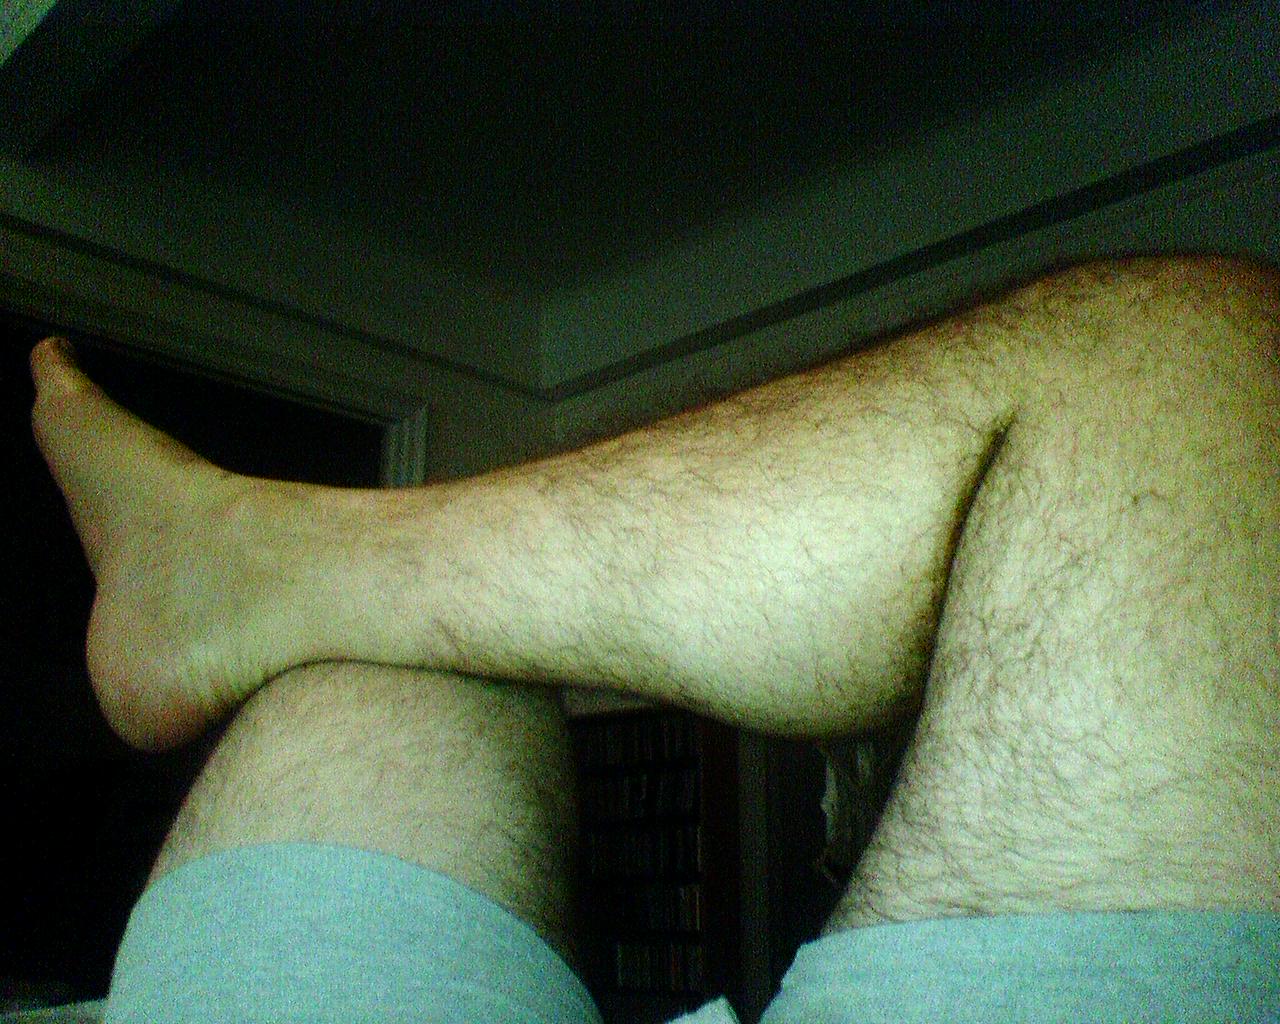 [jon's+hairy+leg+IMG00162.JPG]